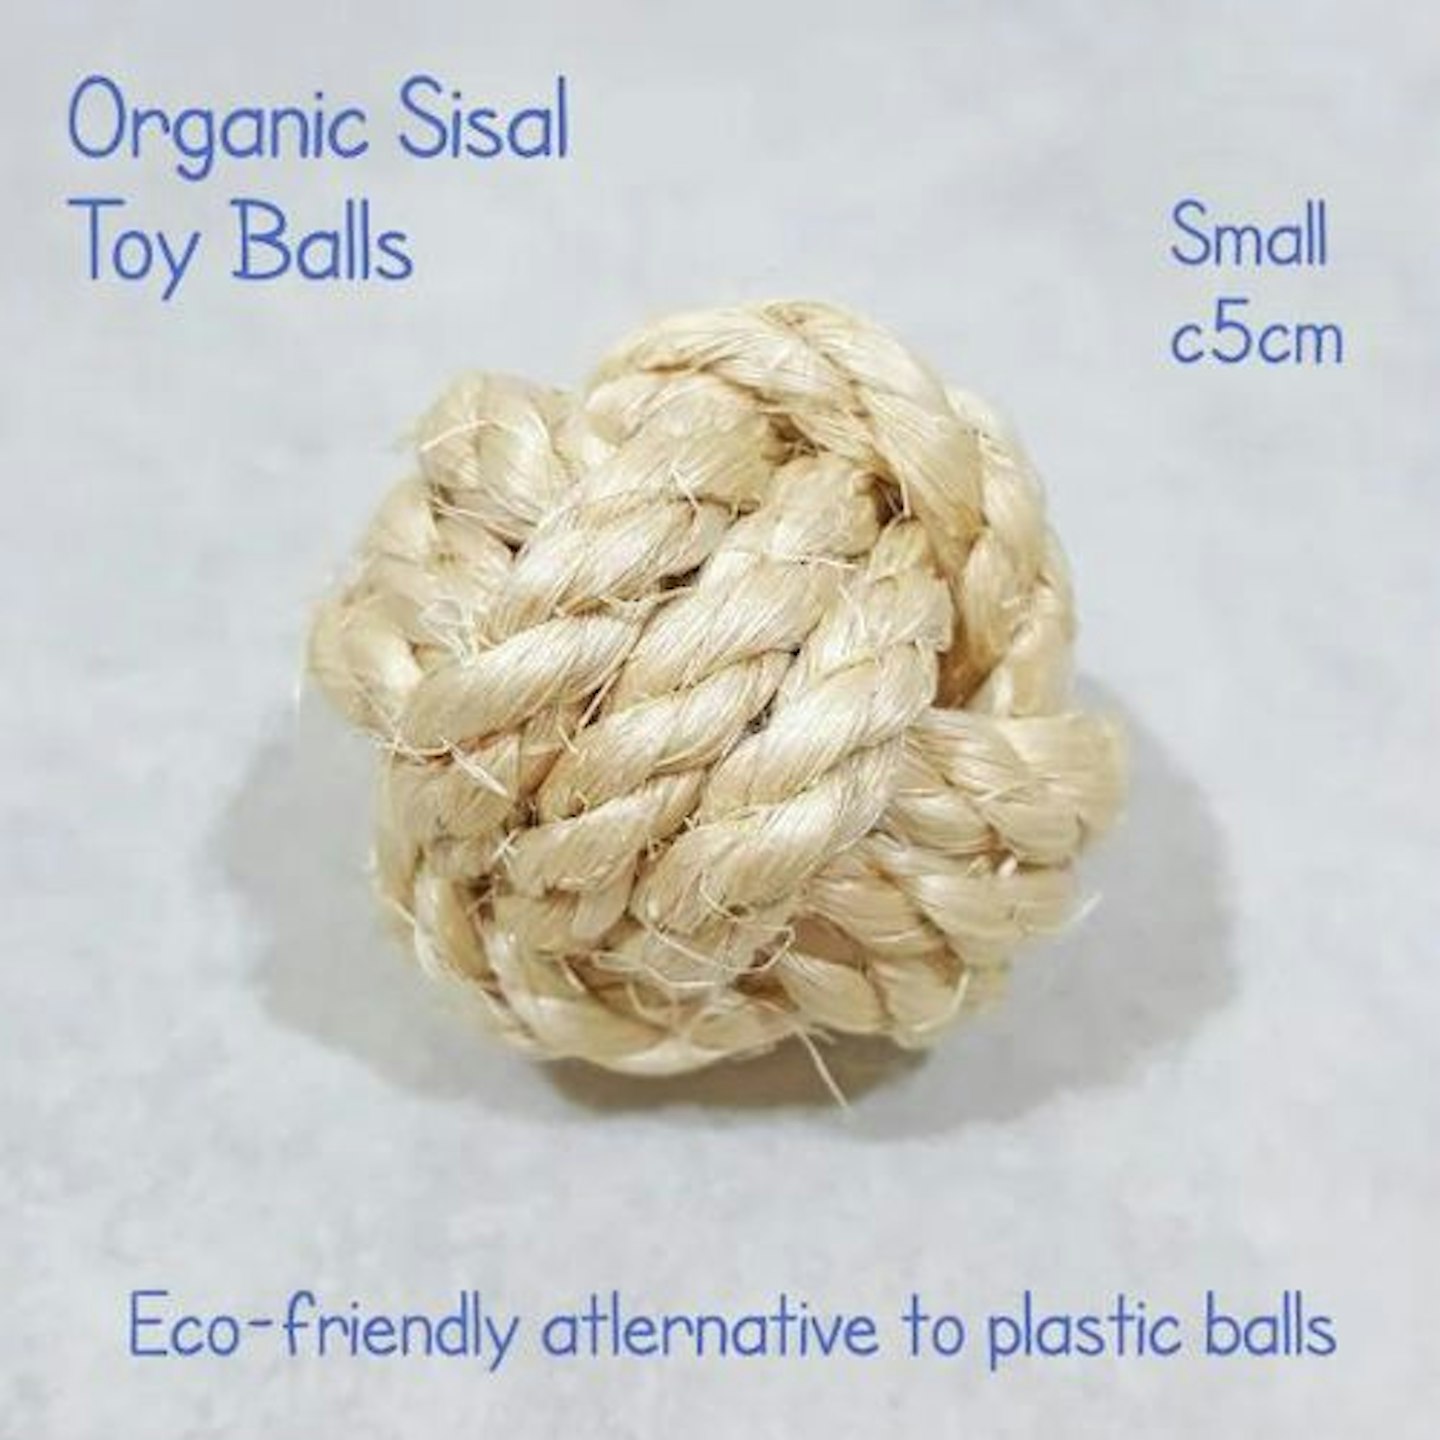 Small Organic Sisal Balls for Cats